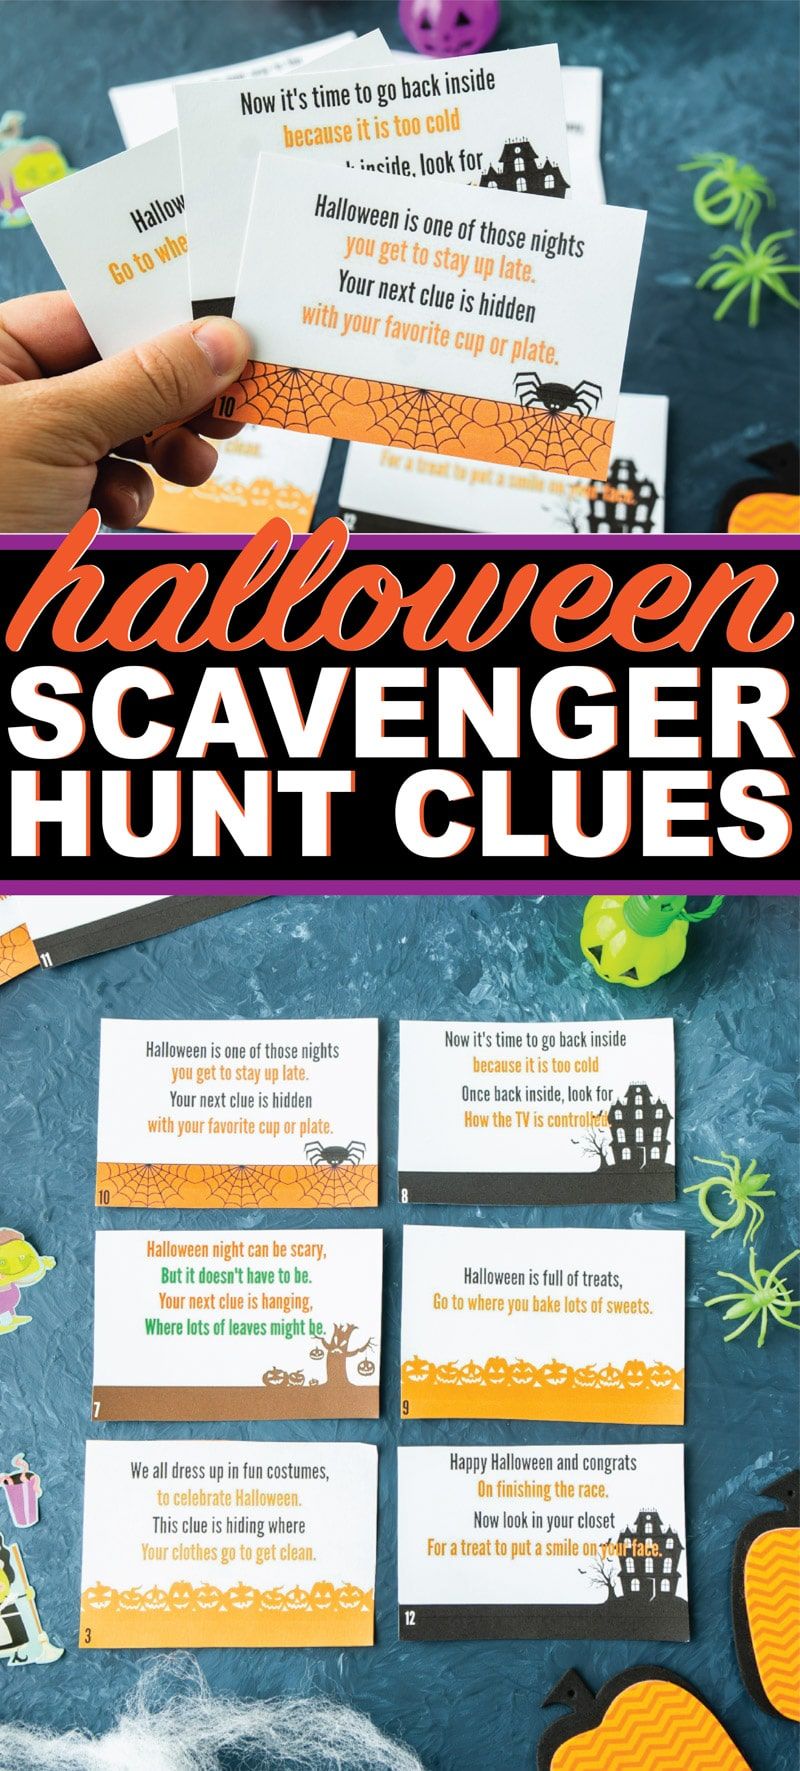 Pistas de búsqueda del tesoro de Halloween para imprimir gratis